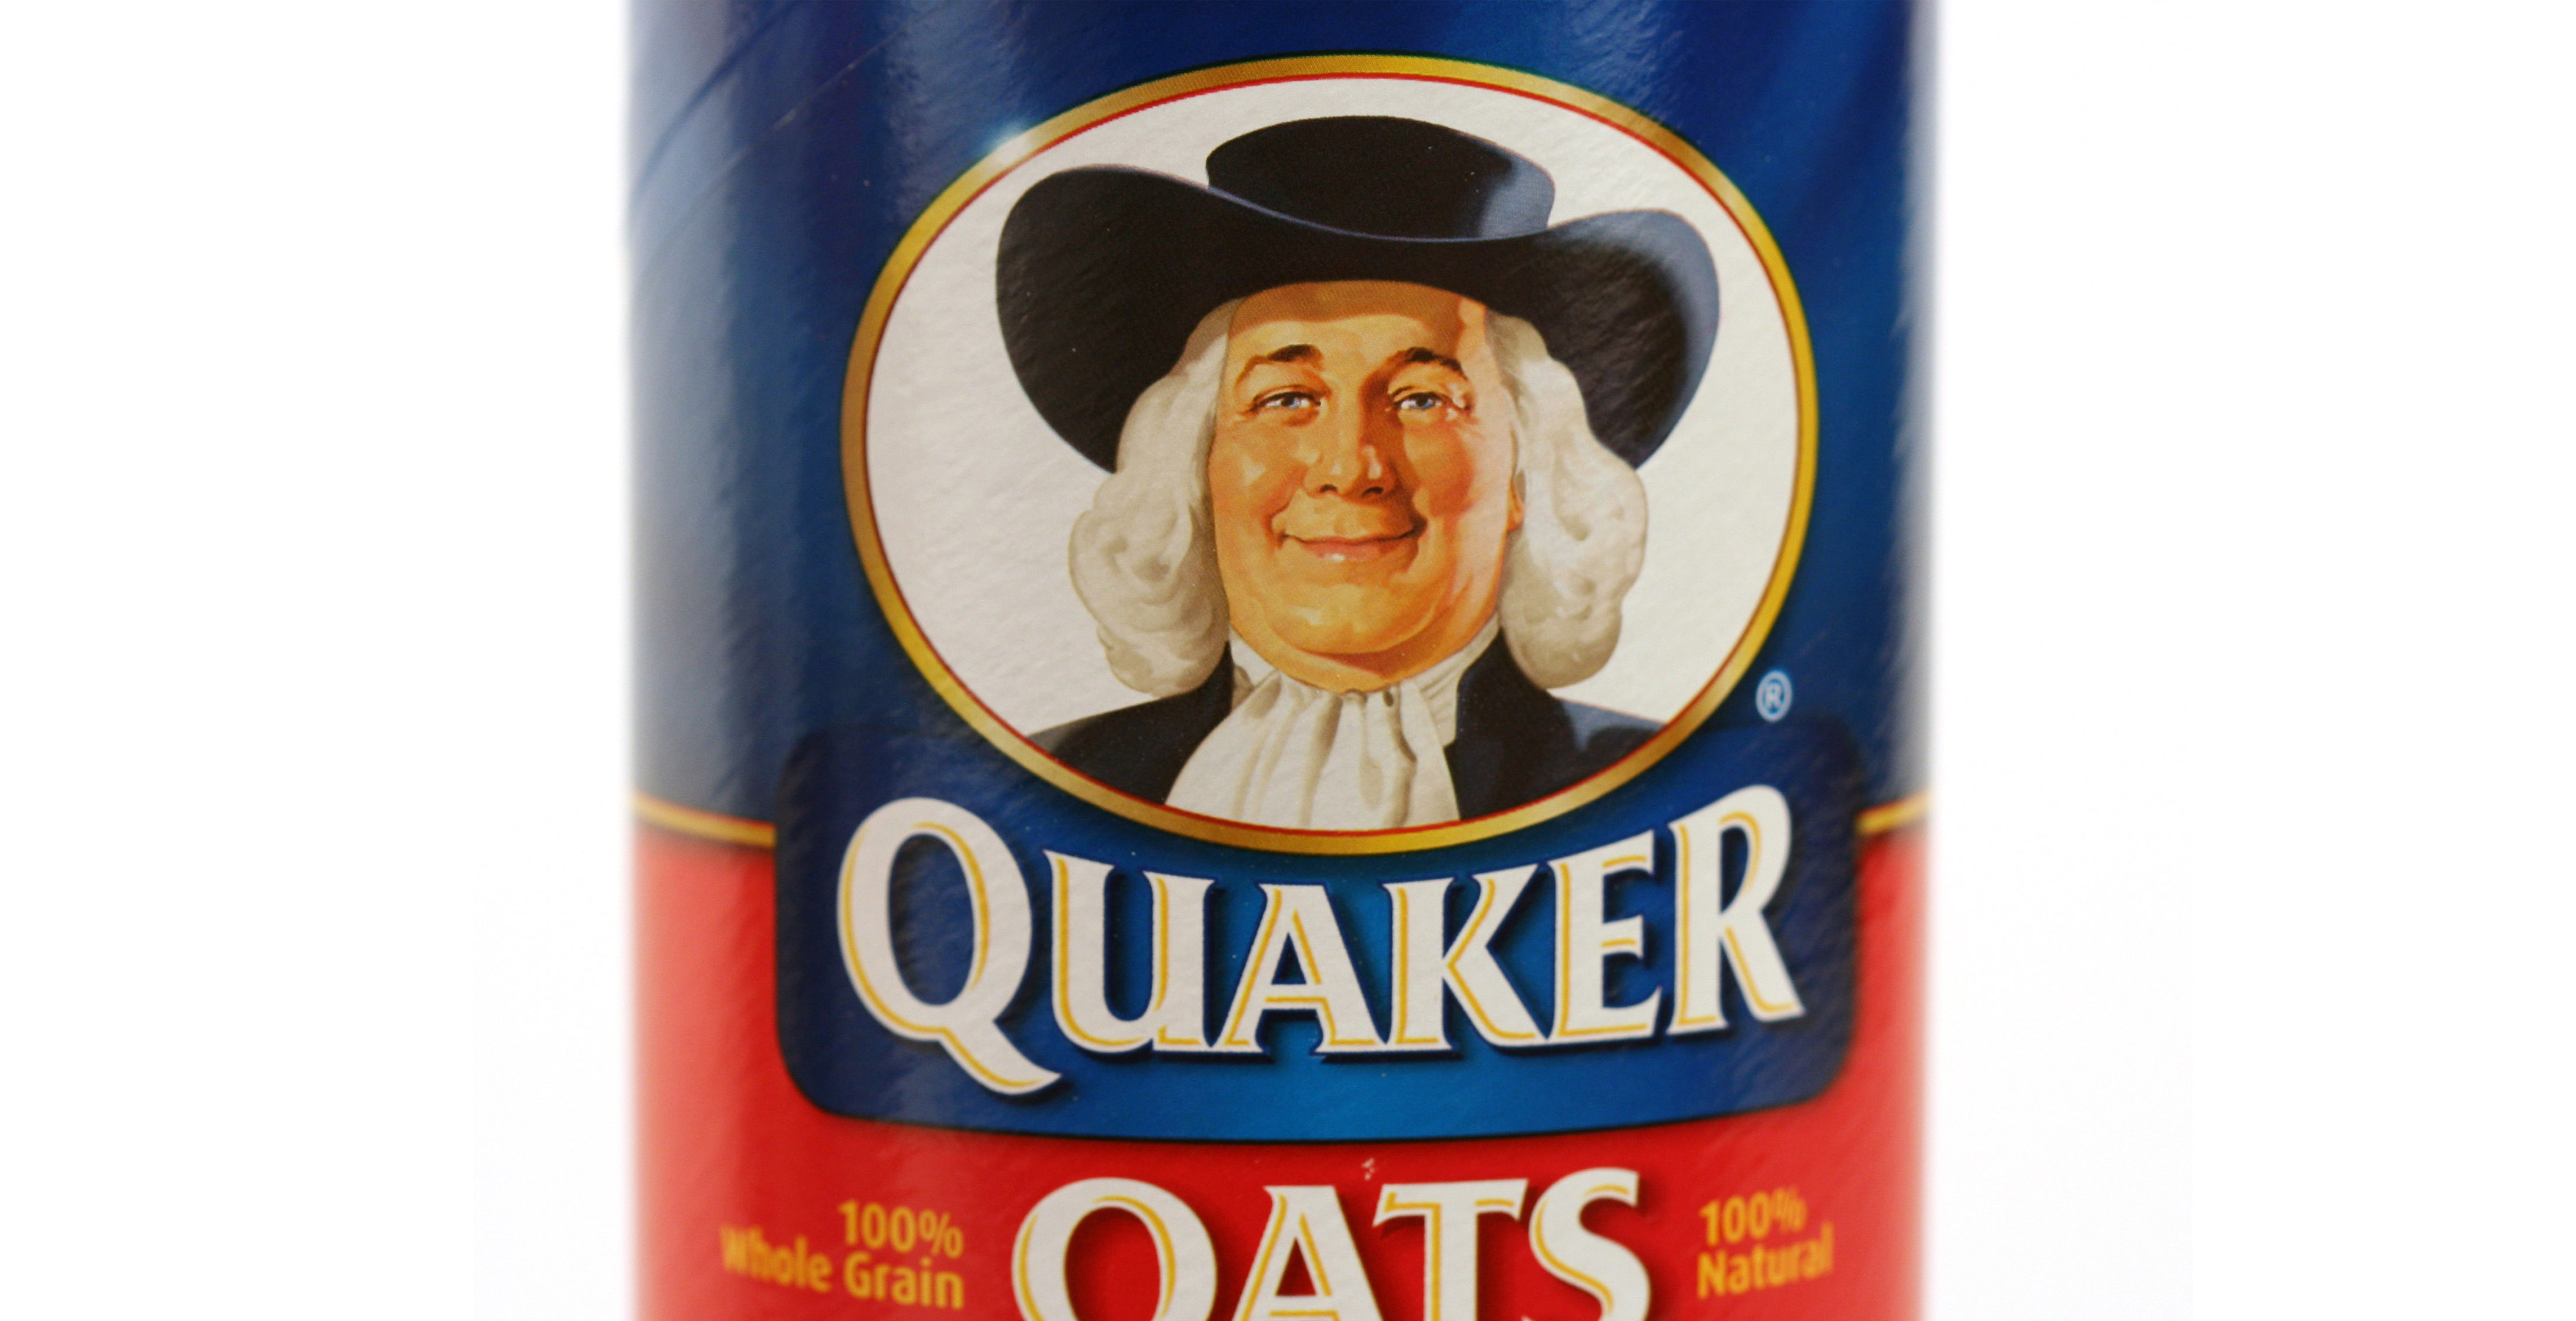 PROUDdesign Develop New Packaging Design For Quaker Cruesli – FAB News